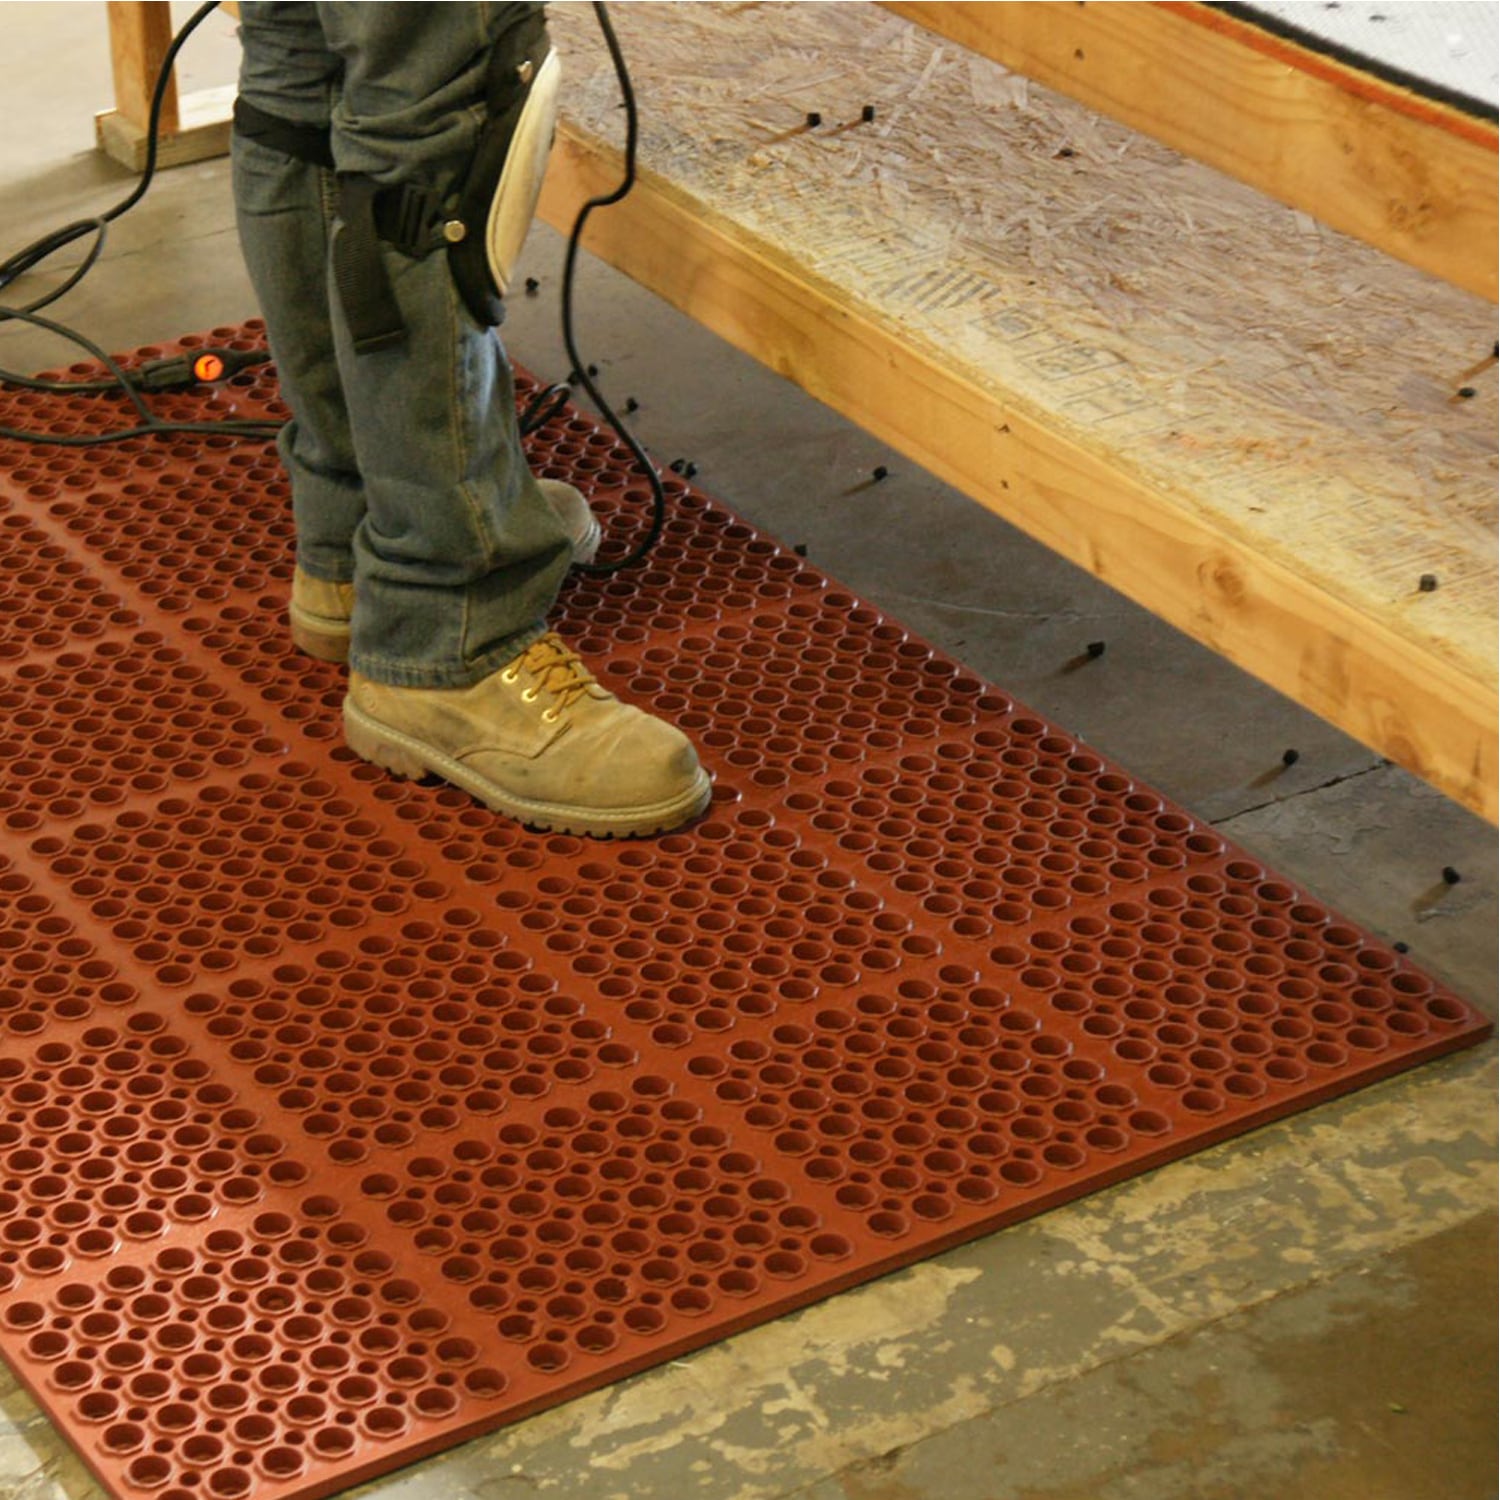 Multy Home™ 36 x 79 Rubber Fitness Floor Mat at Menards®